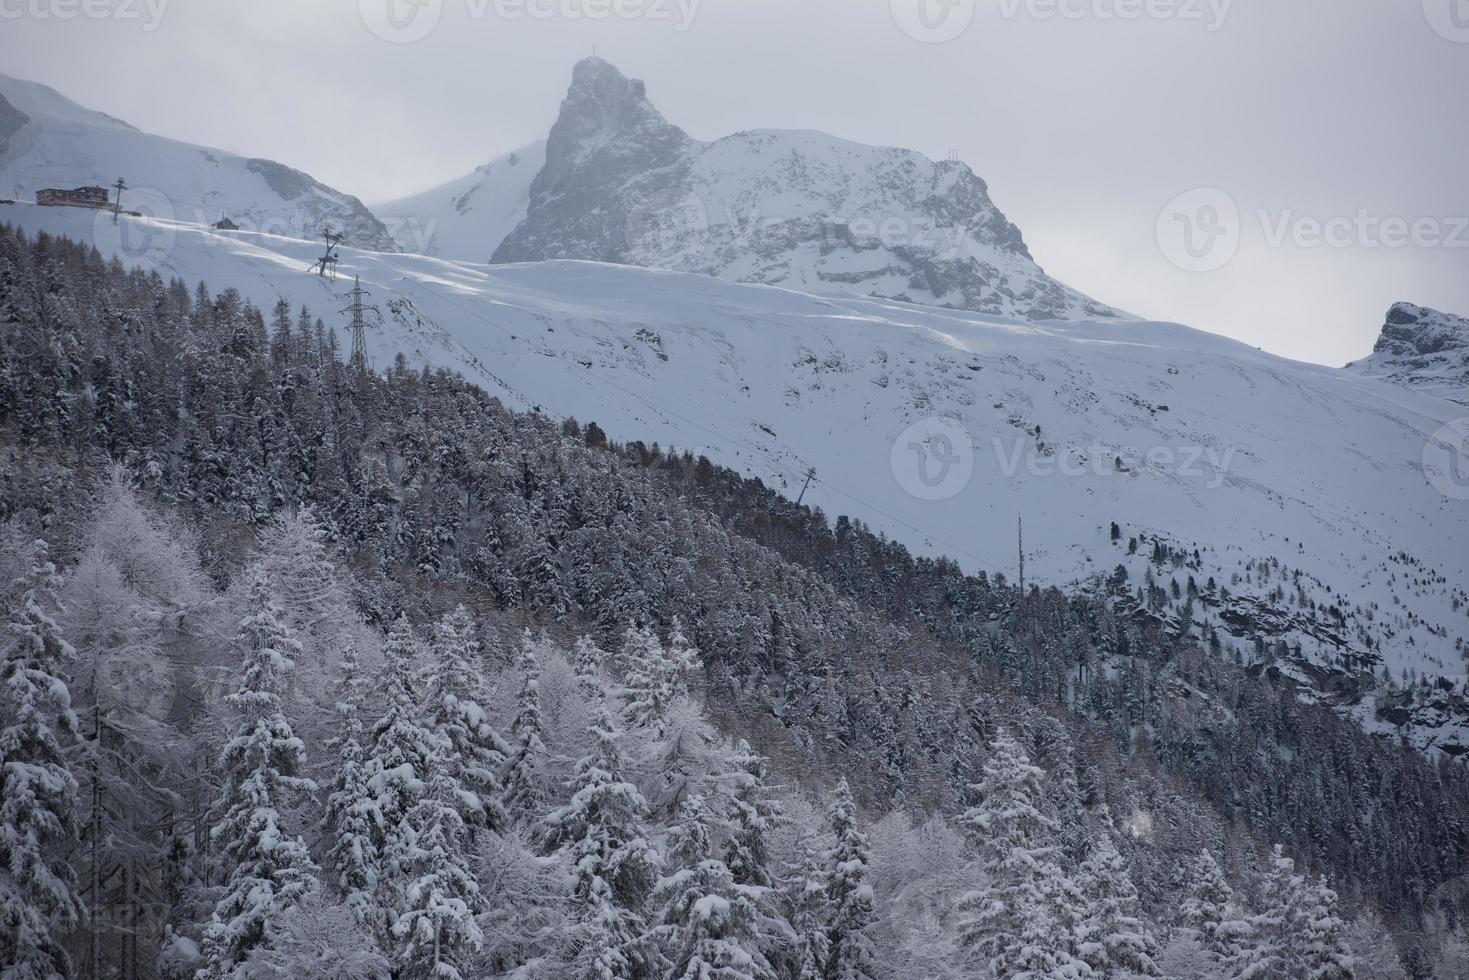 berg matterhorn zermatt schweiz foto